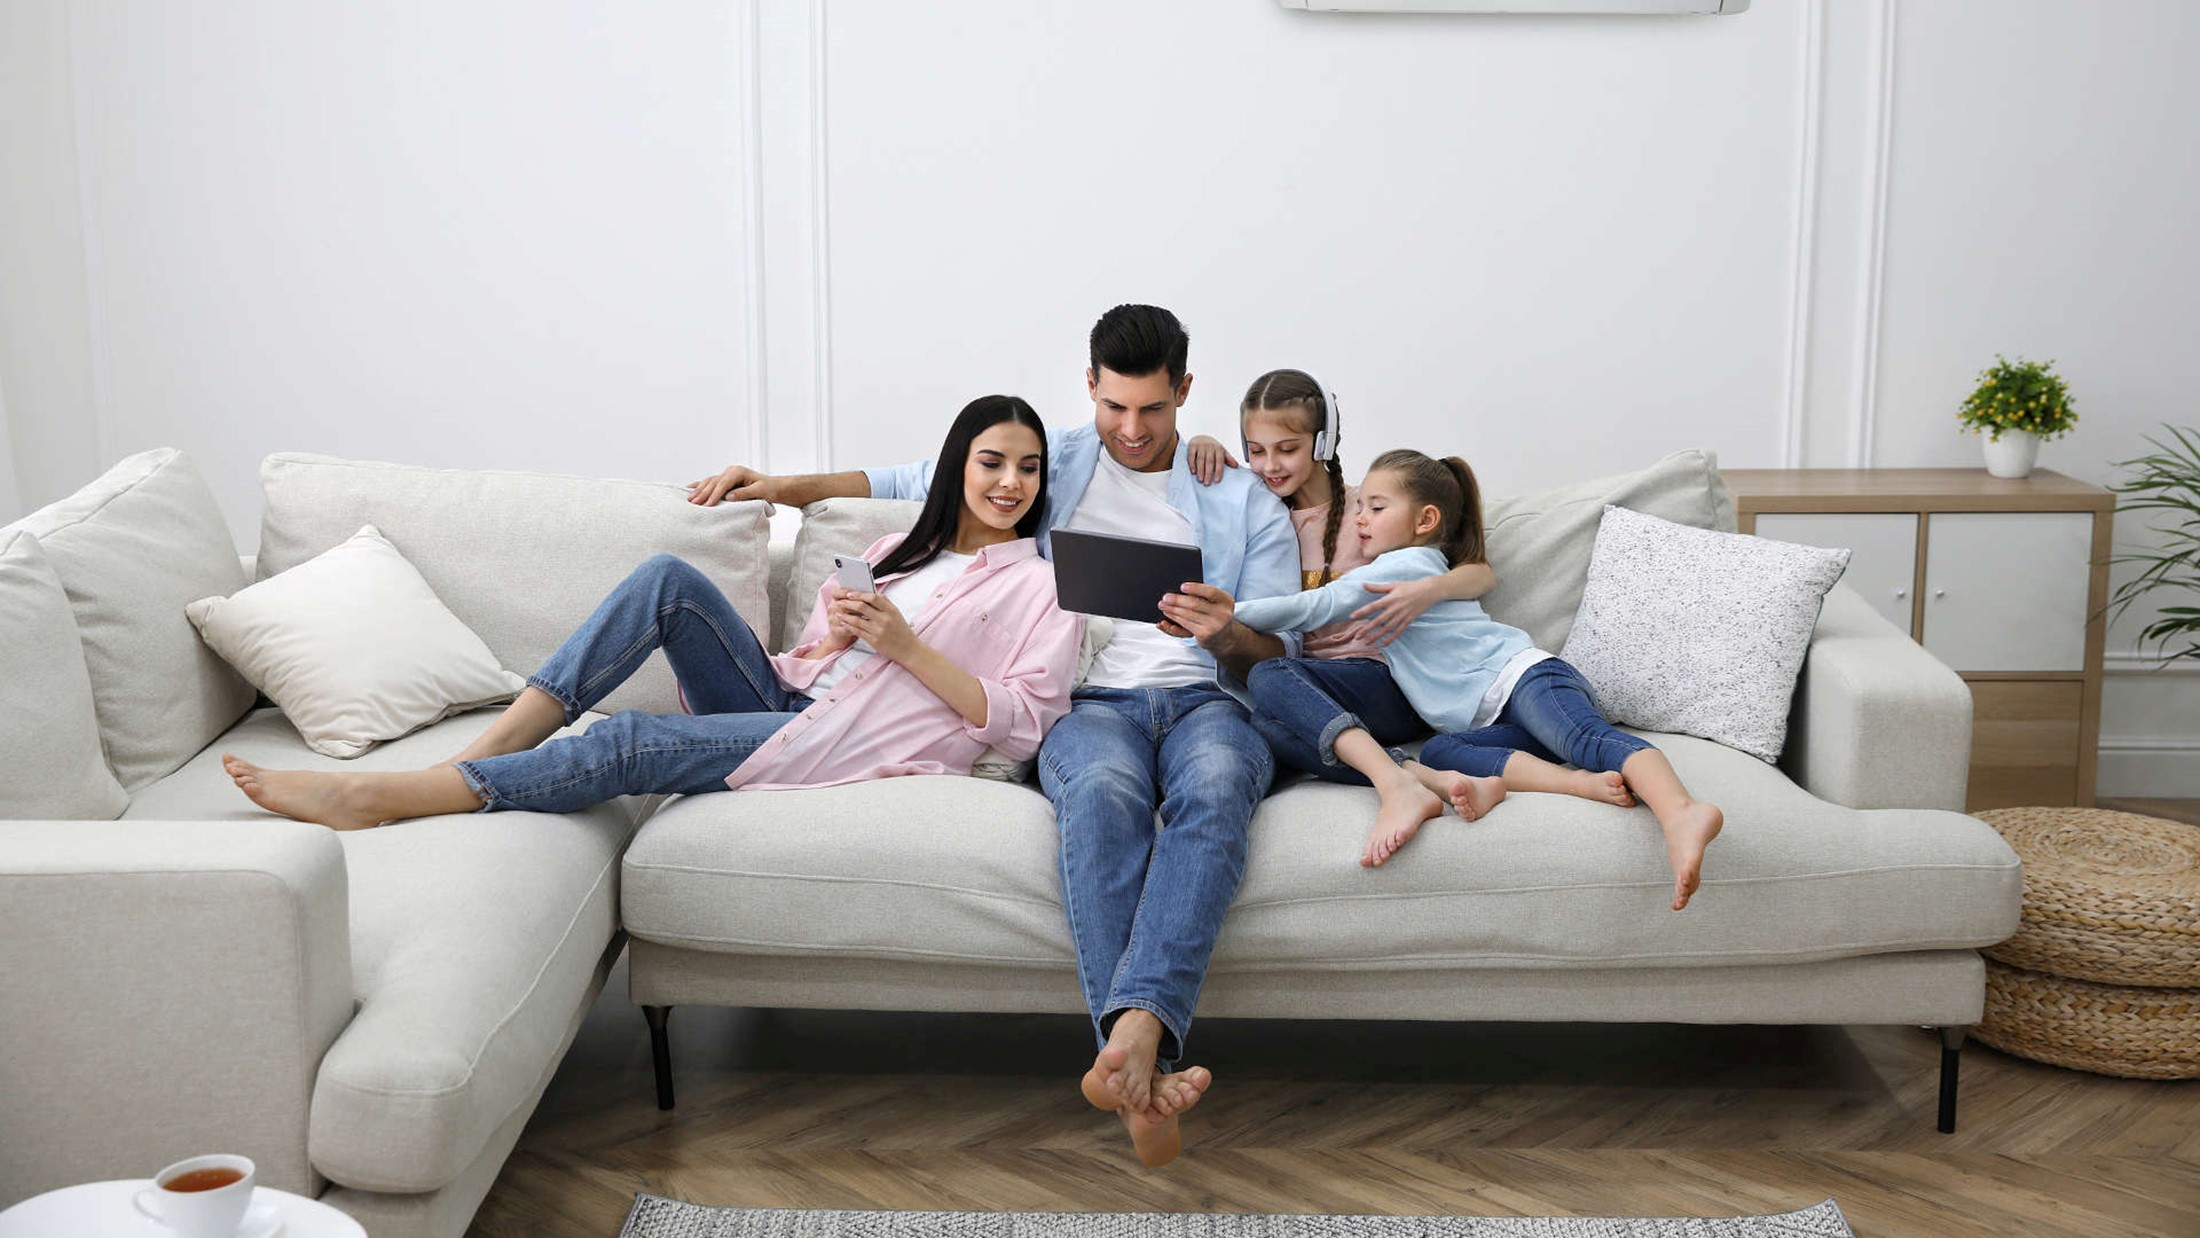 Smart home ventilation – happy family enjoying a ventilated living room